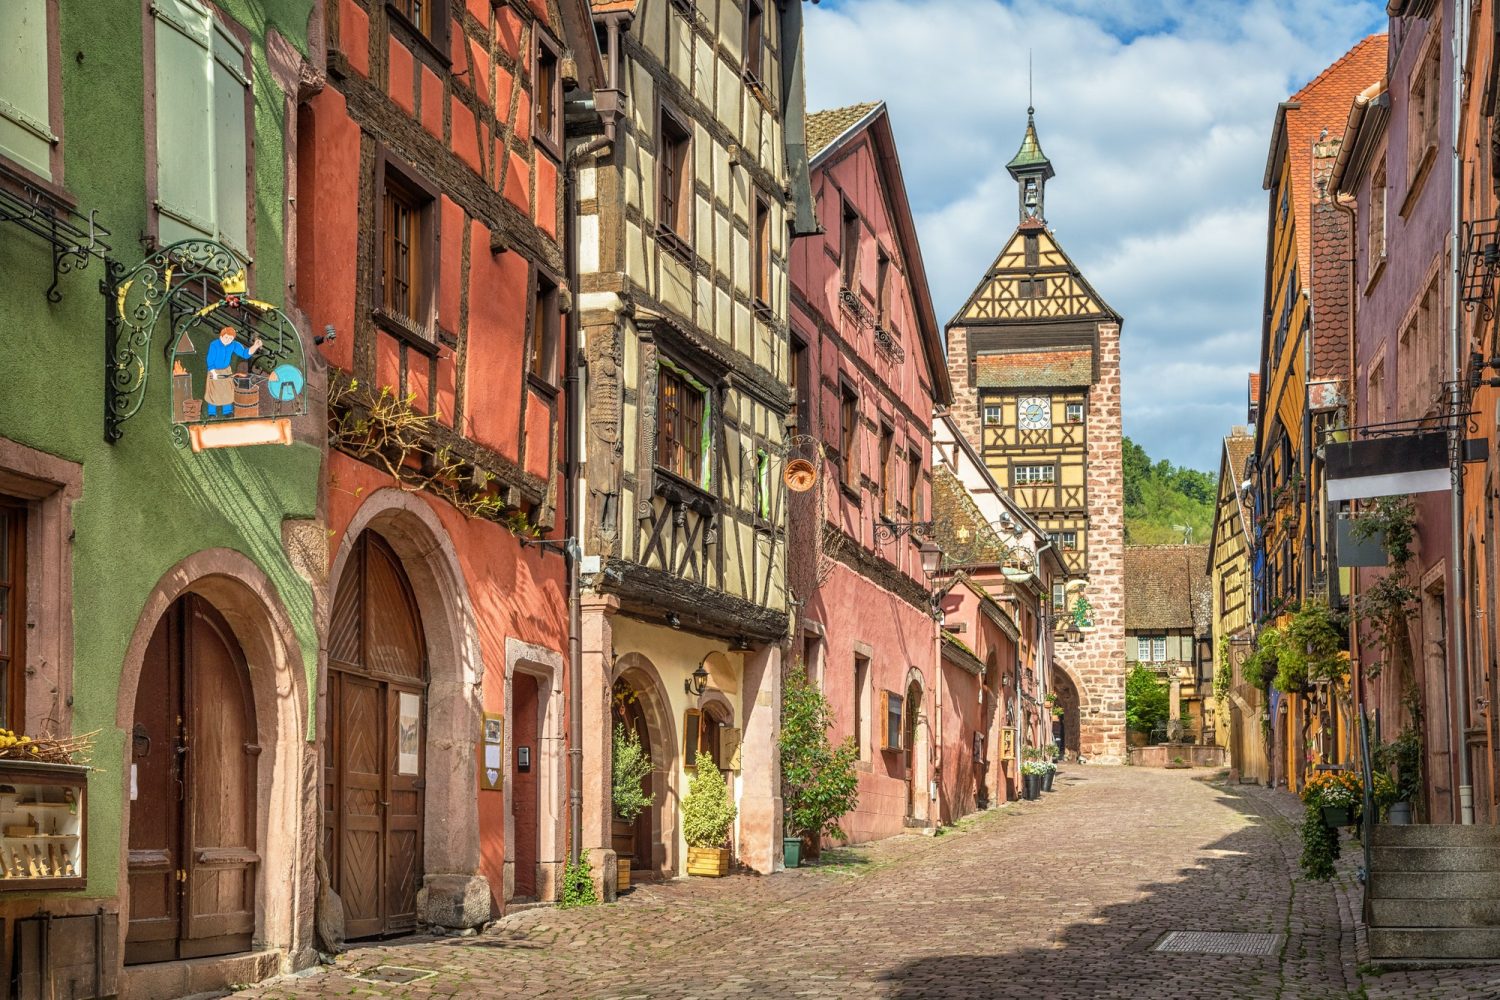 Central street of Riquewihr village, Alsace